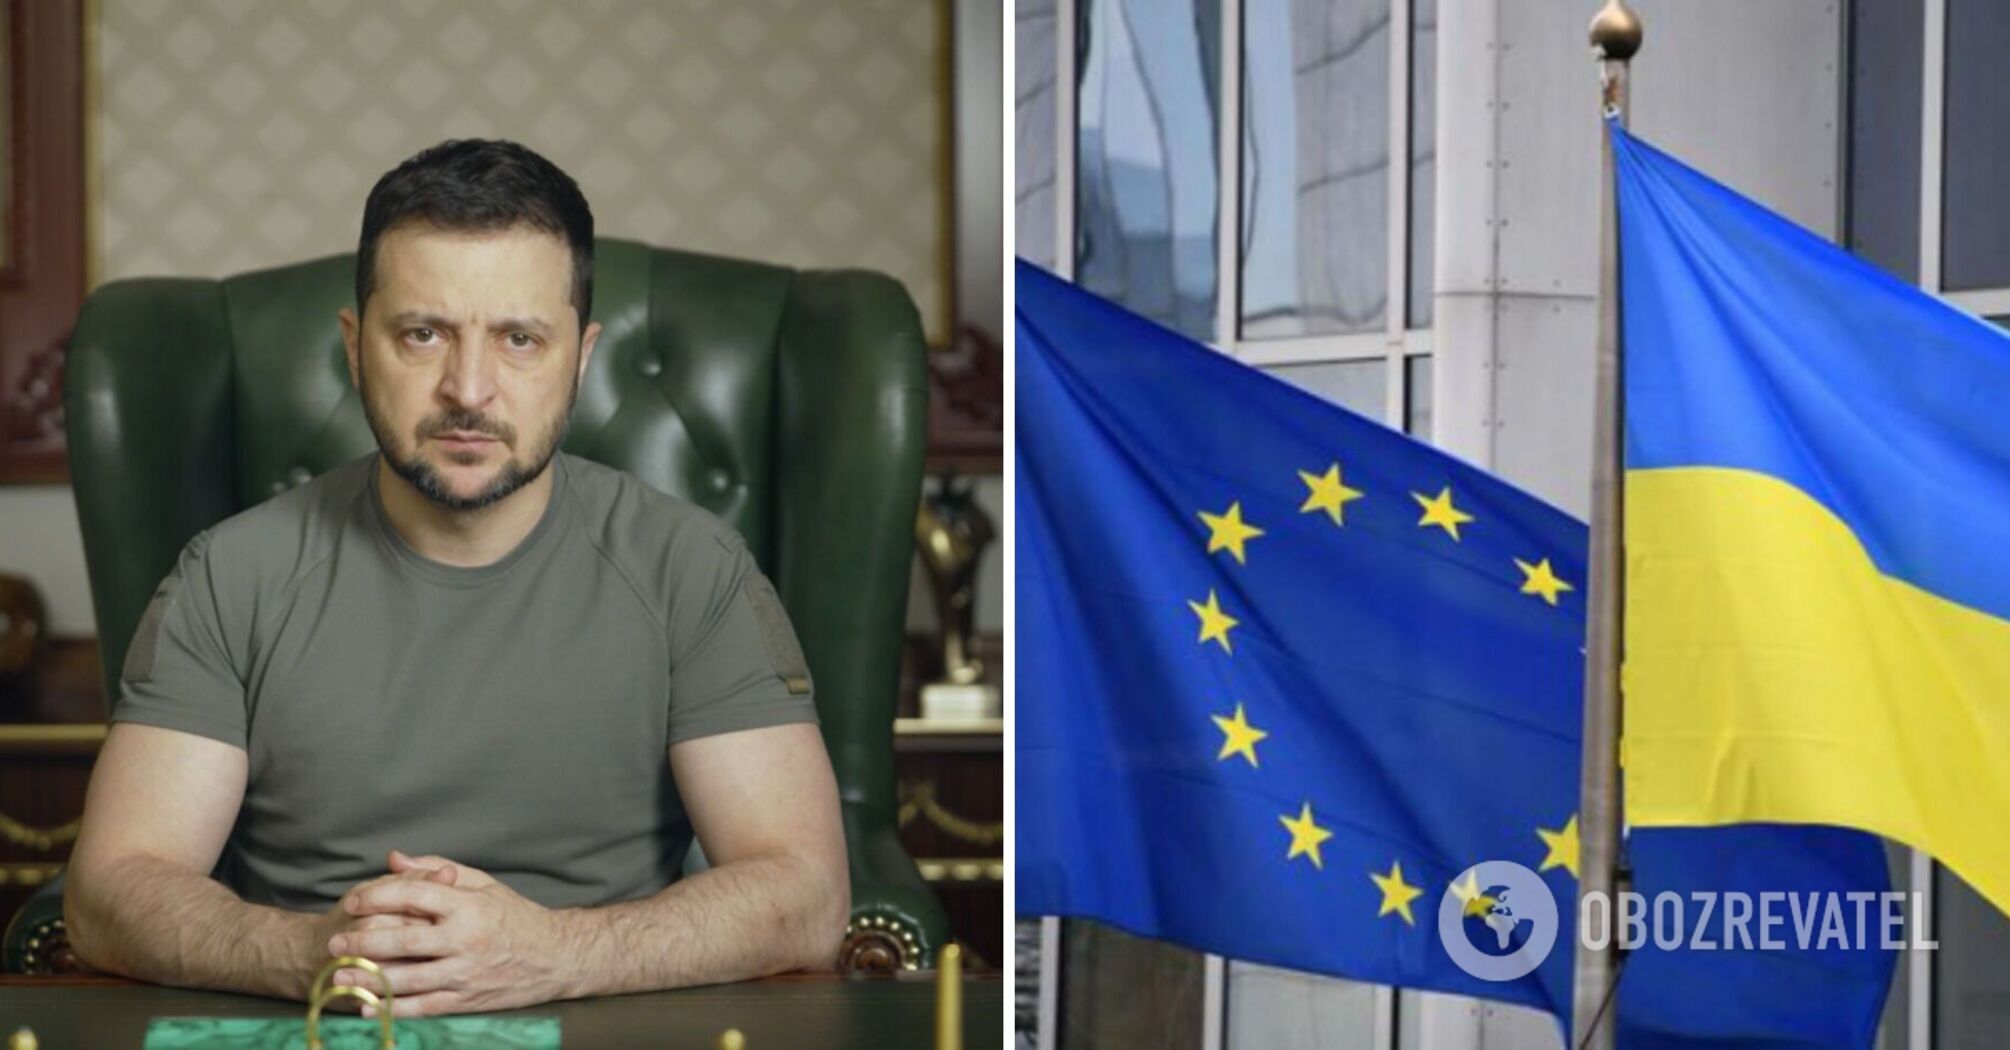 EU officially started the process of screening Ukrainian legislation - Zelenskyy